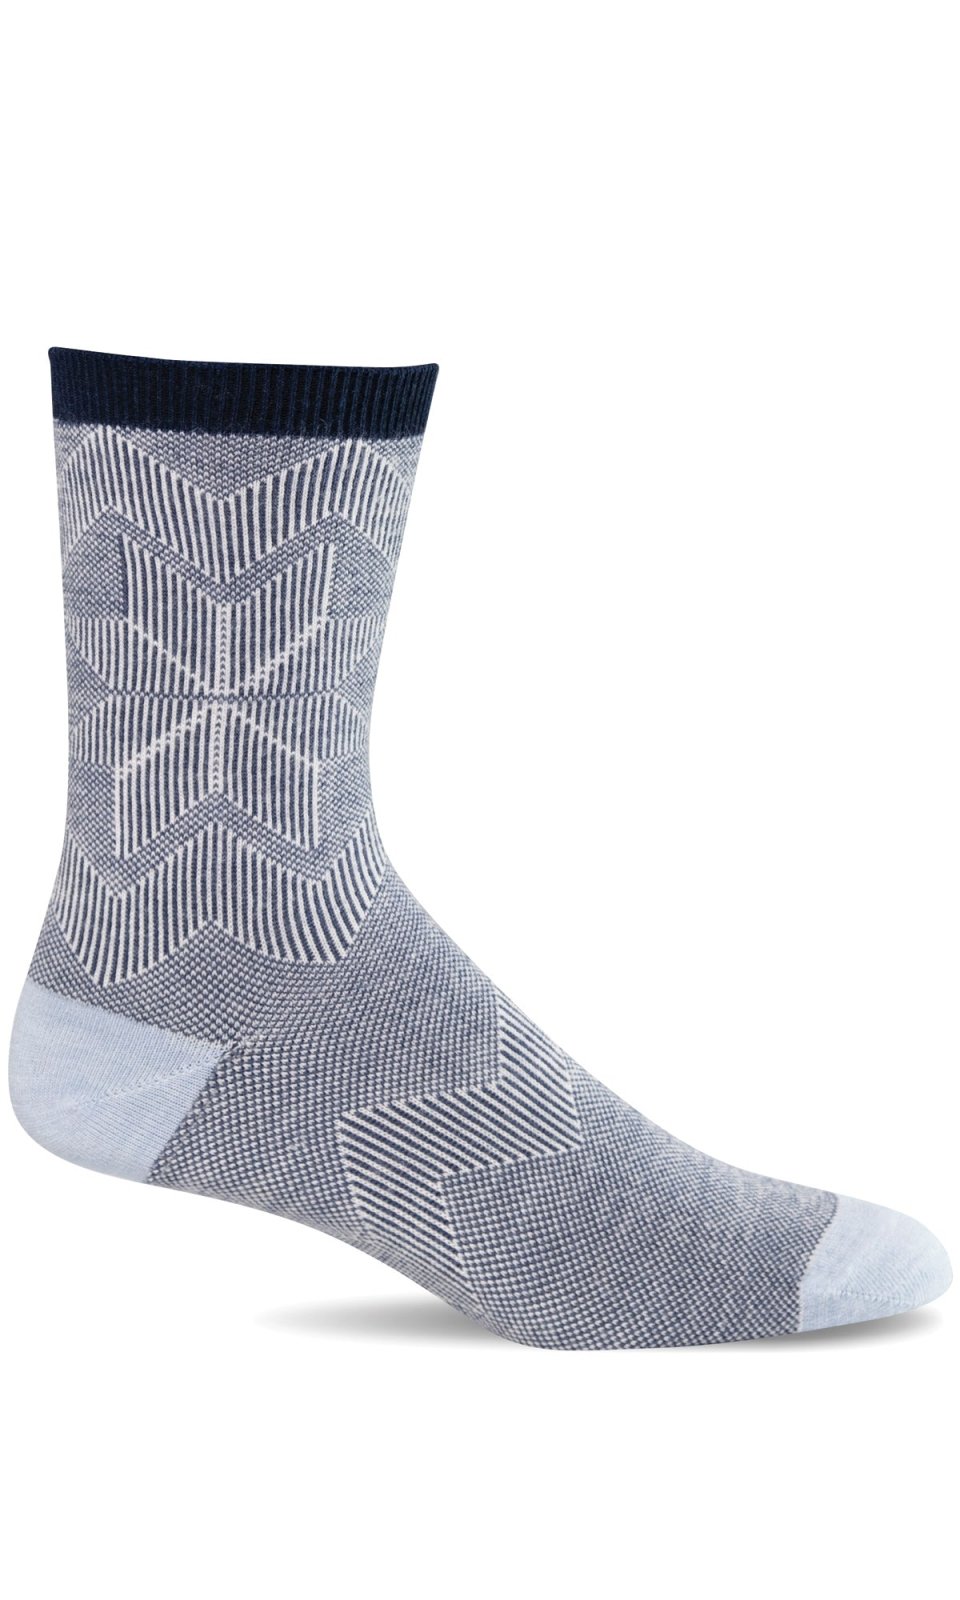 Sockwell Northwind Essential Comfort Socks (Women's)